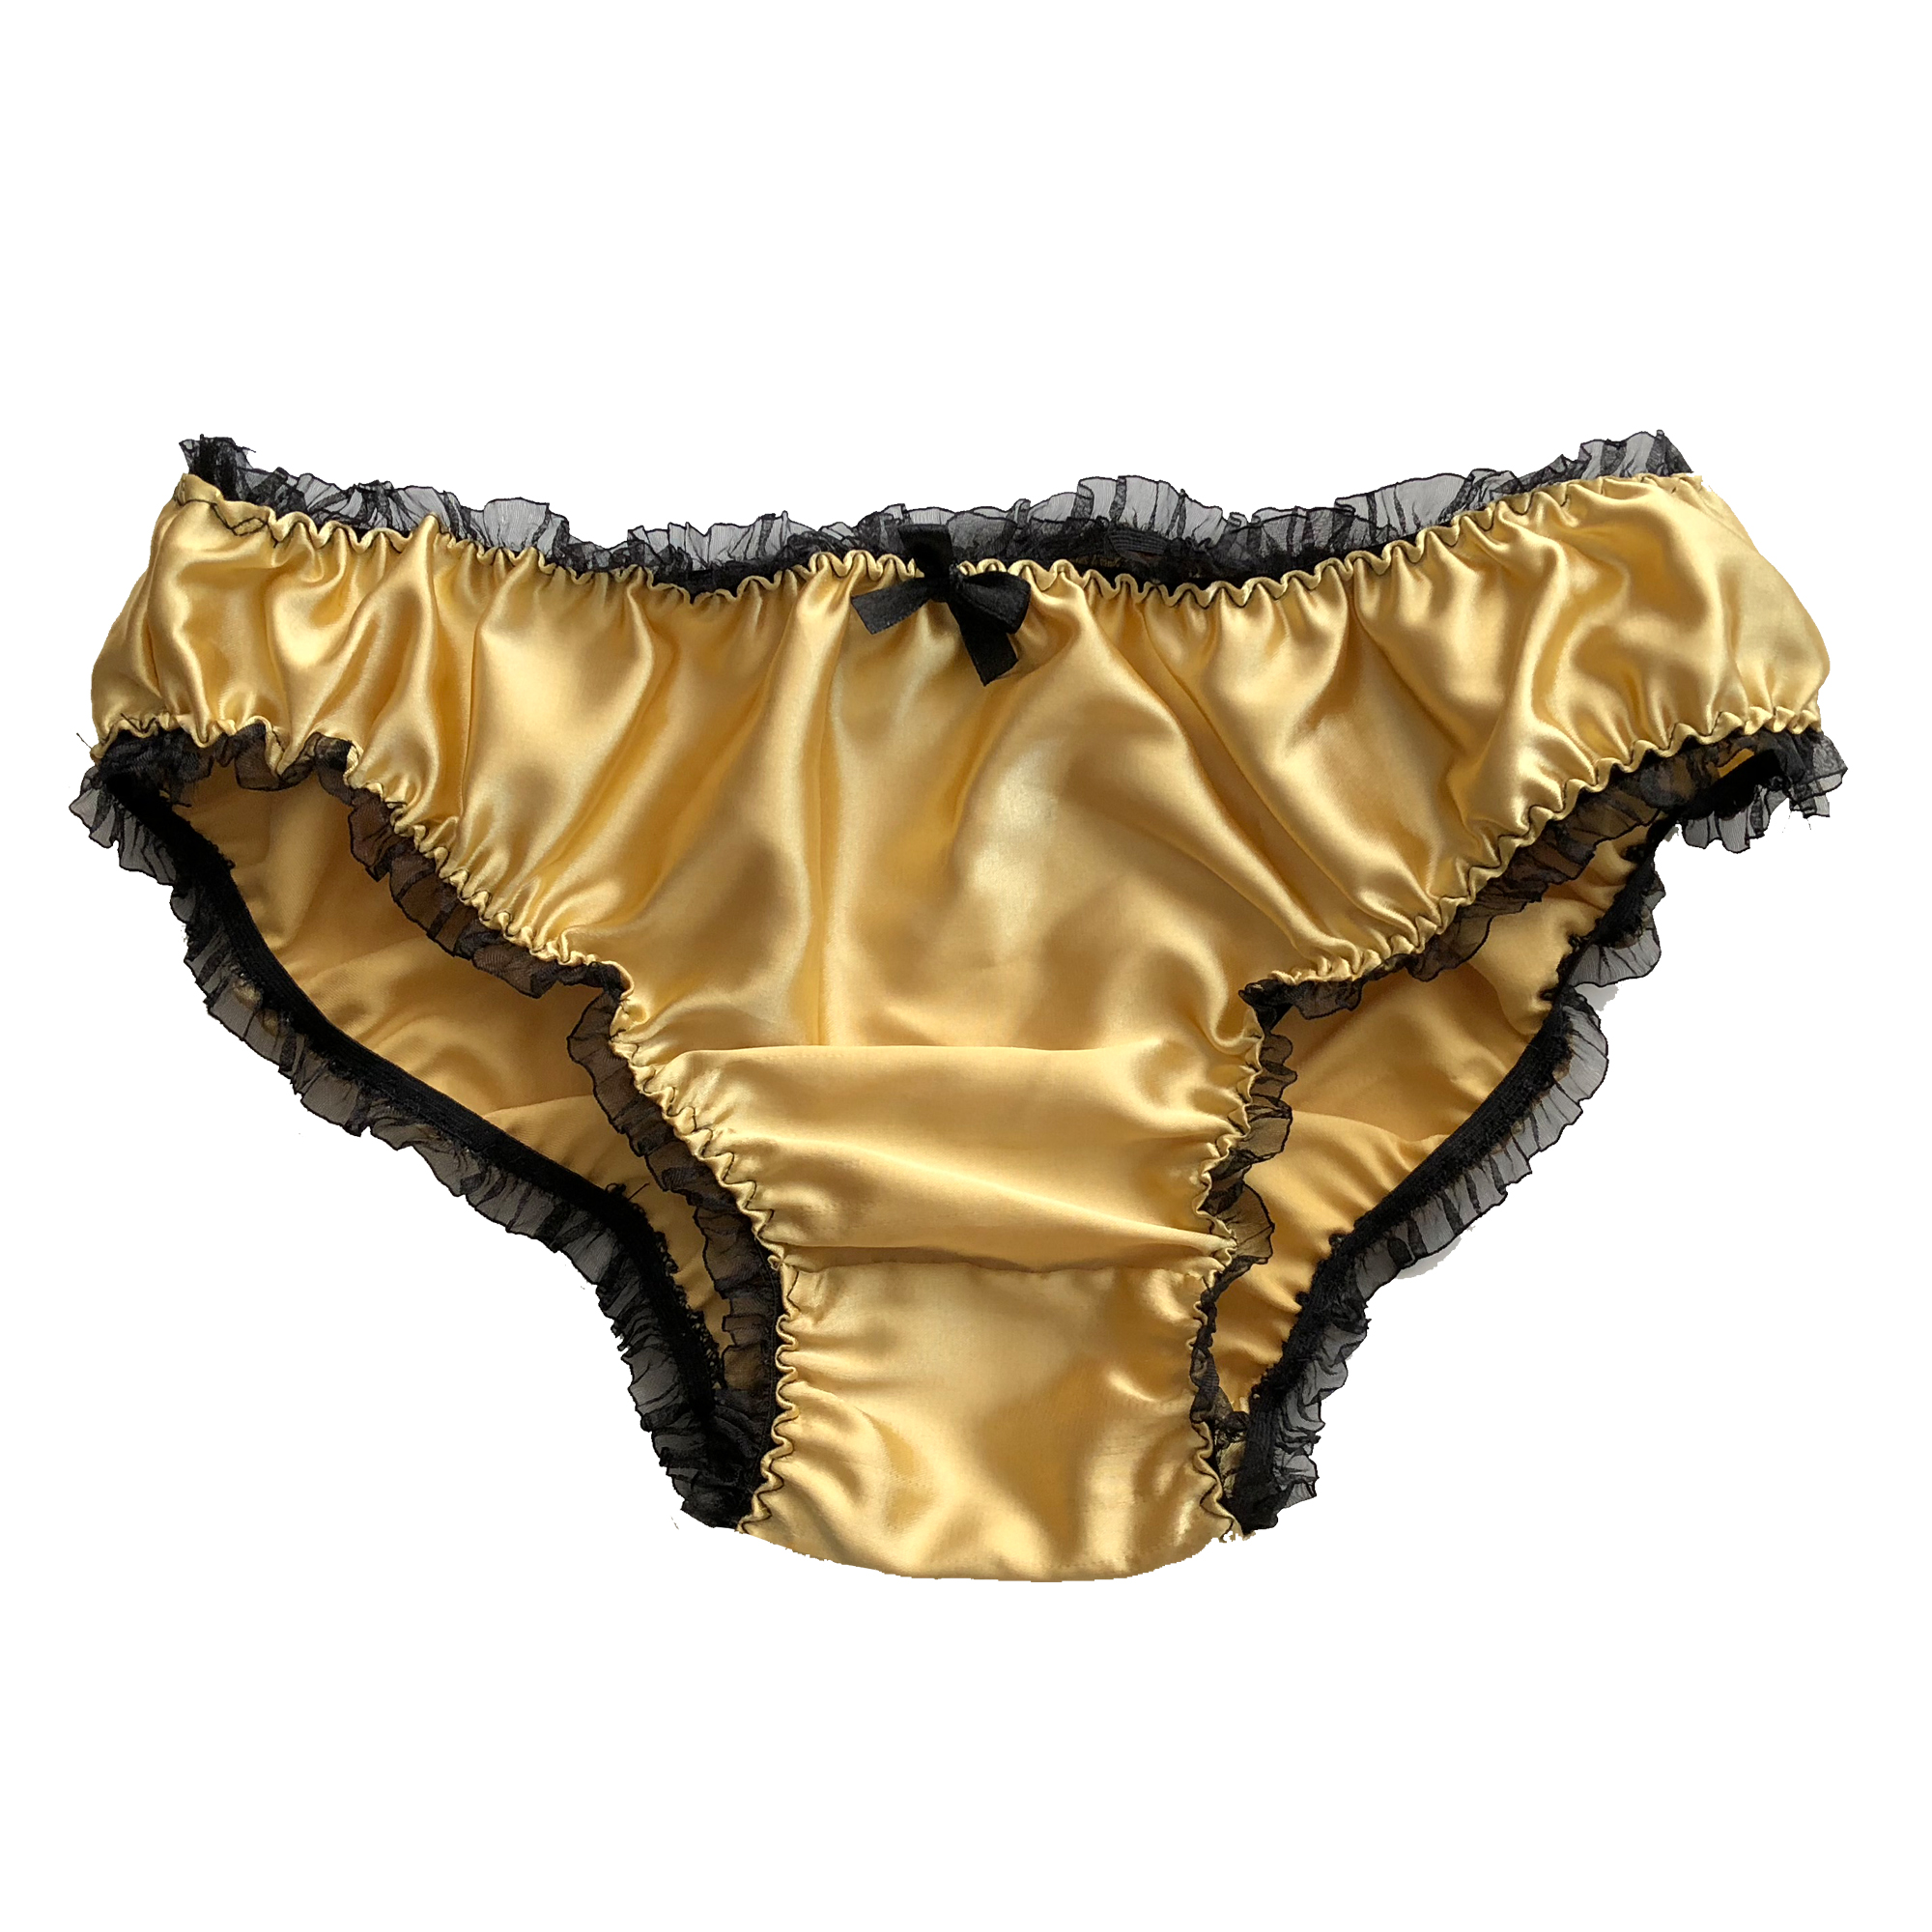 Satin Frilly Sissy à Volants Culotte Bikini De Culotte Sous Vêtements Slips Tailles 6 20 Ebay